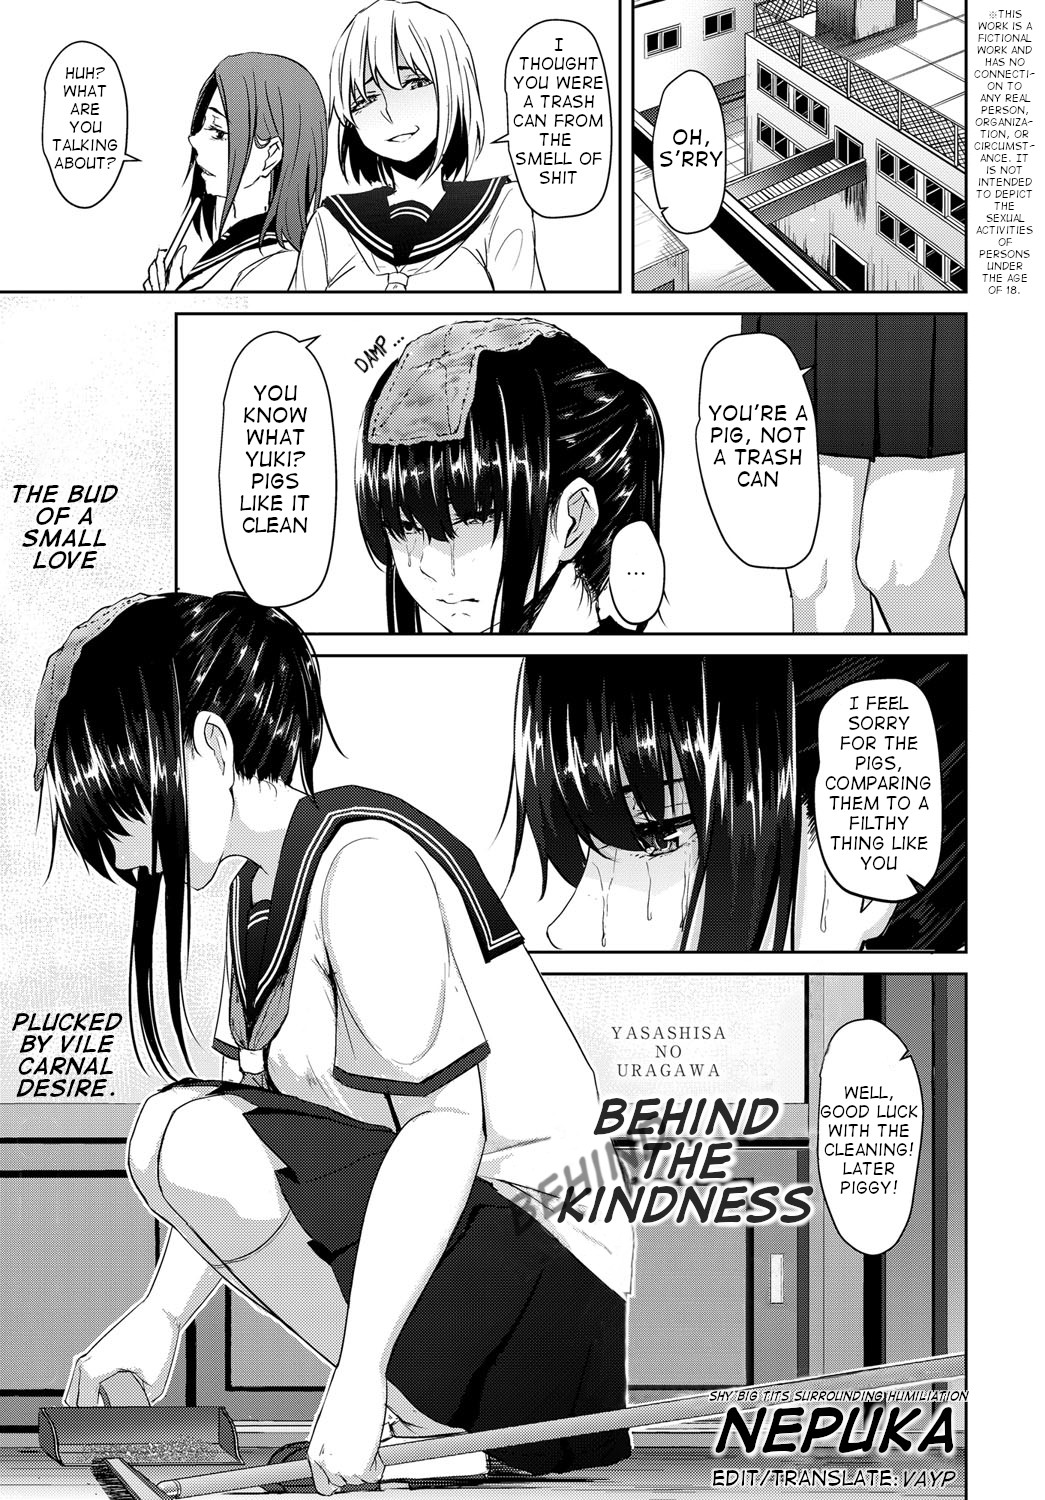 Hentai Manga Comic-Behind the Kindness-Read-1